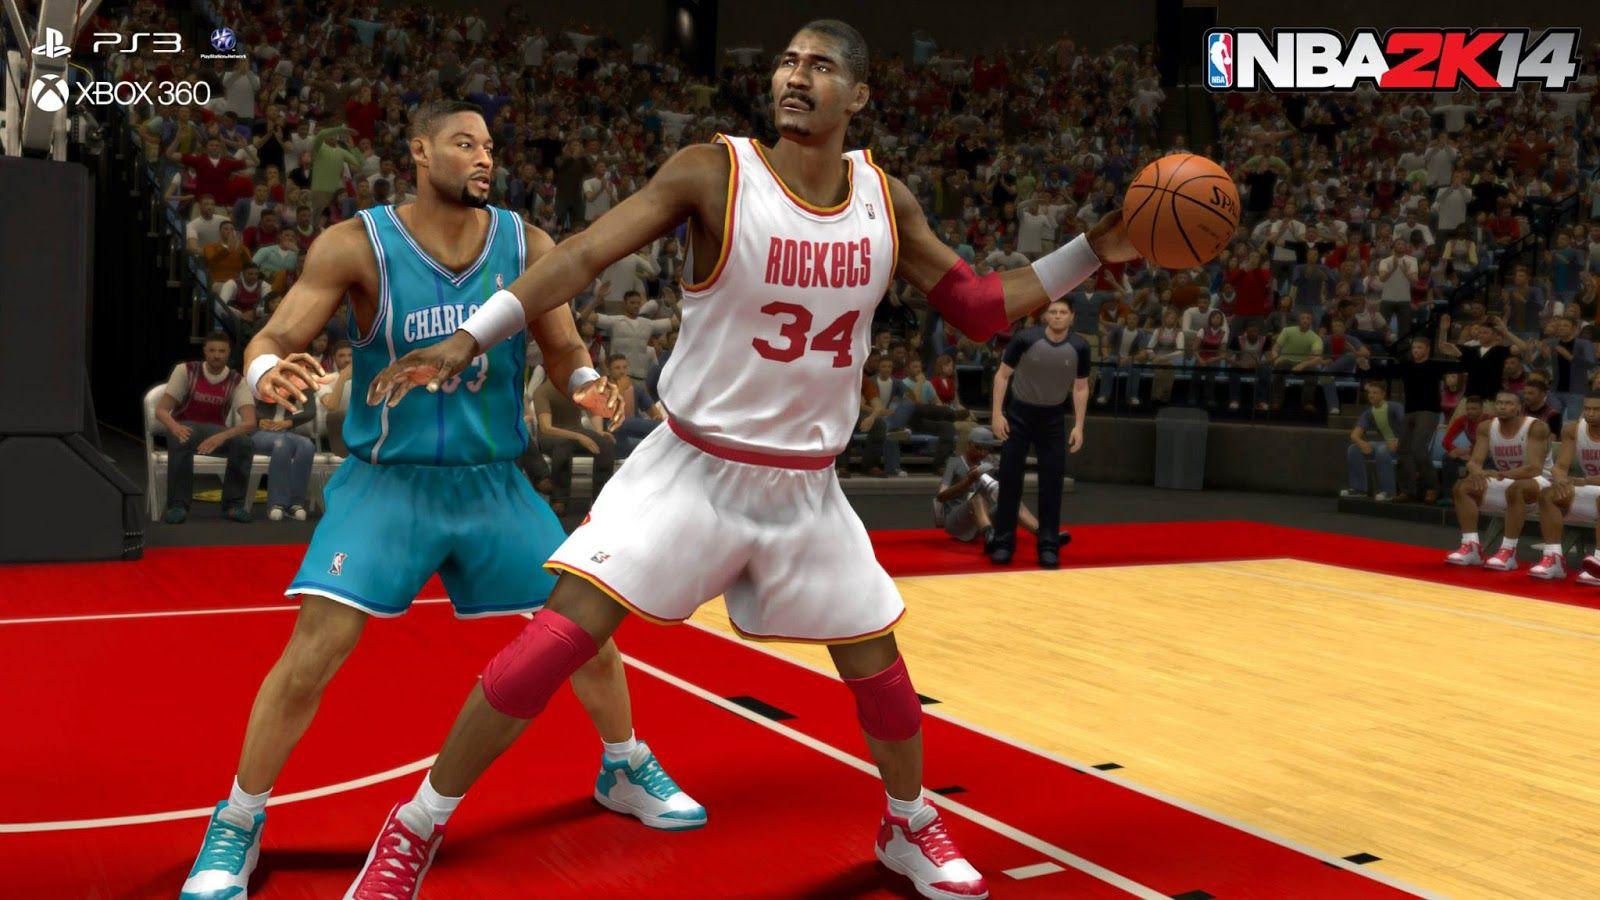 Legends and Historic Teams Back in NBA 2k14, Michael Jordan Dunk